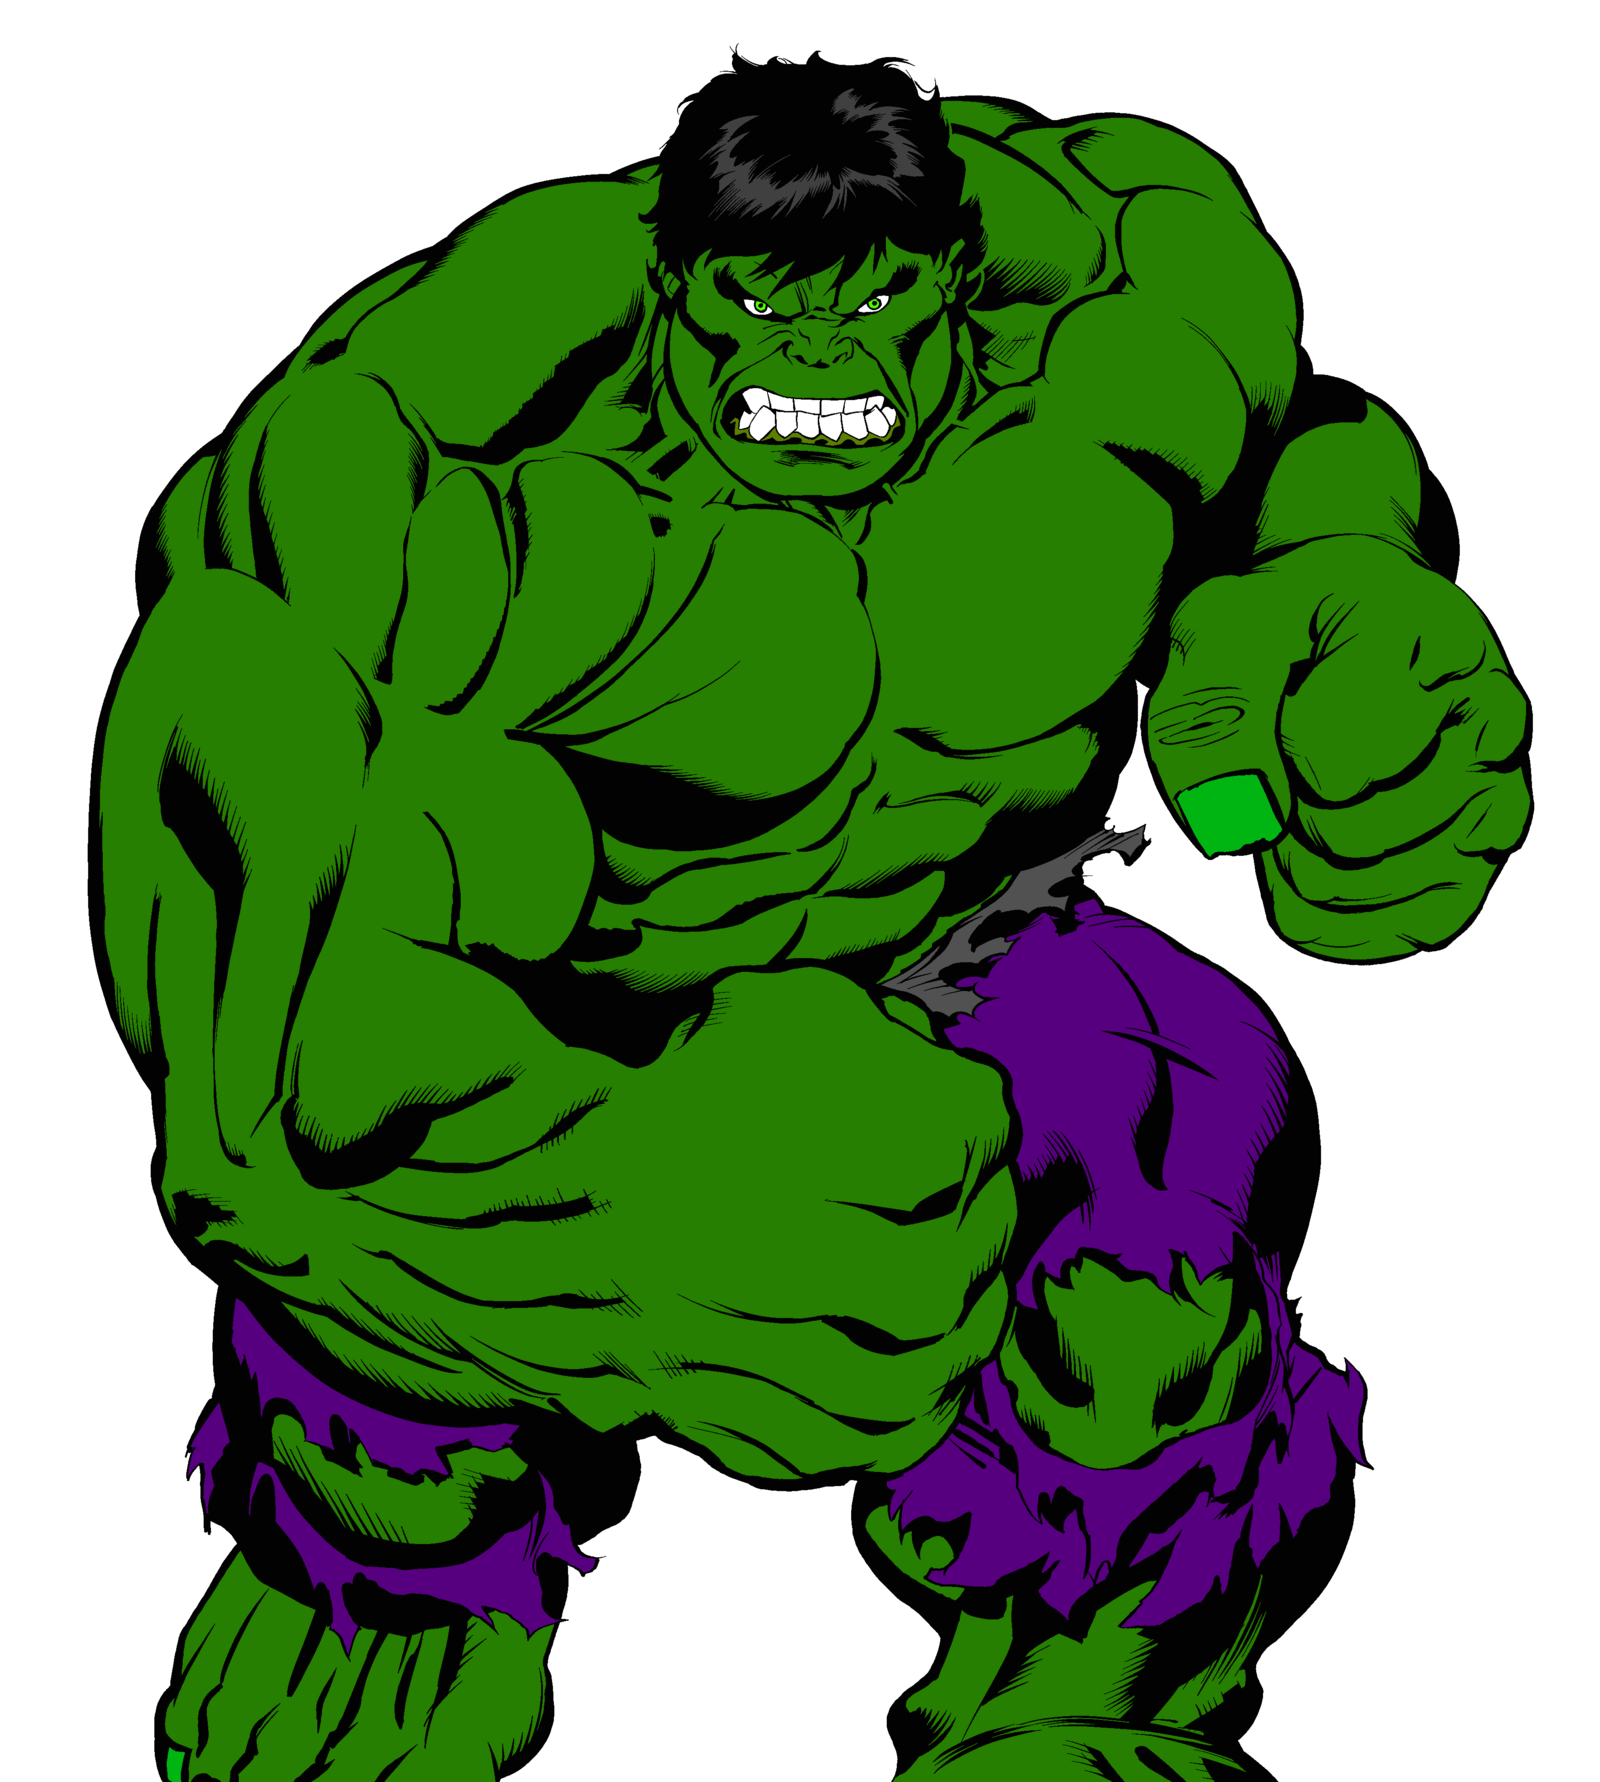 Hulk marvel steeven7620.